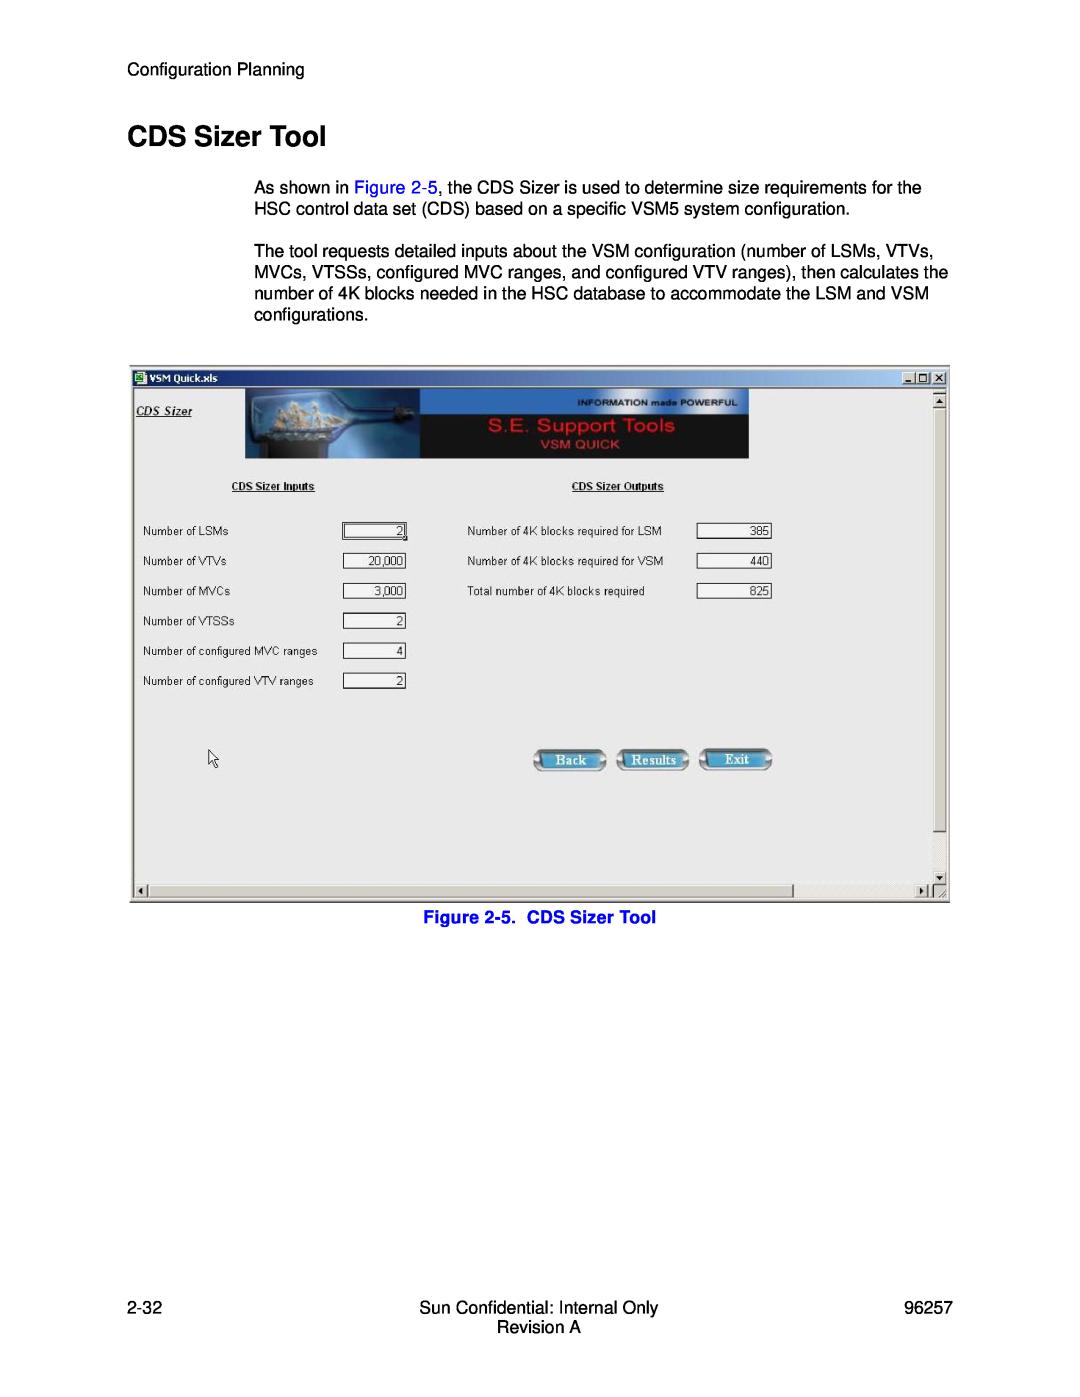 Sun Microsystems 96257 manual 5. CDS Sizer Tool 